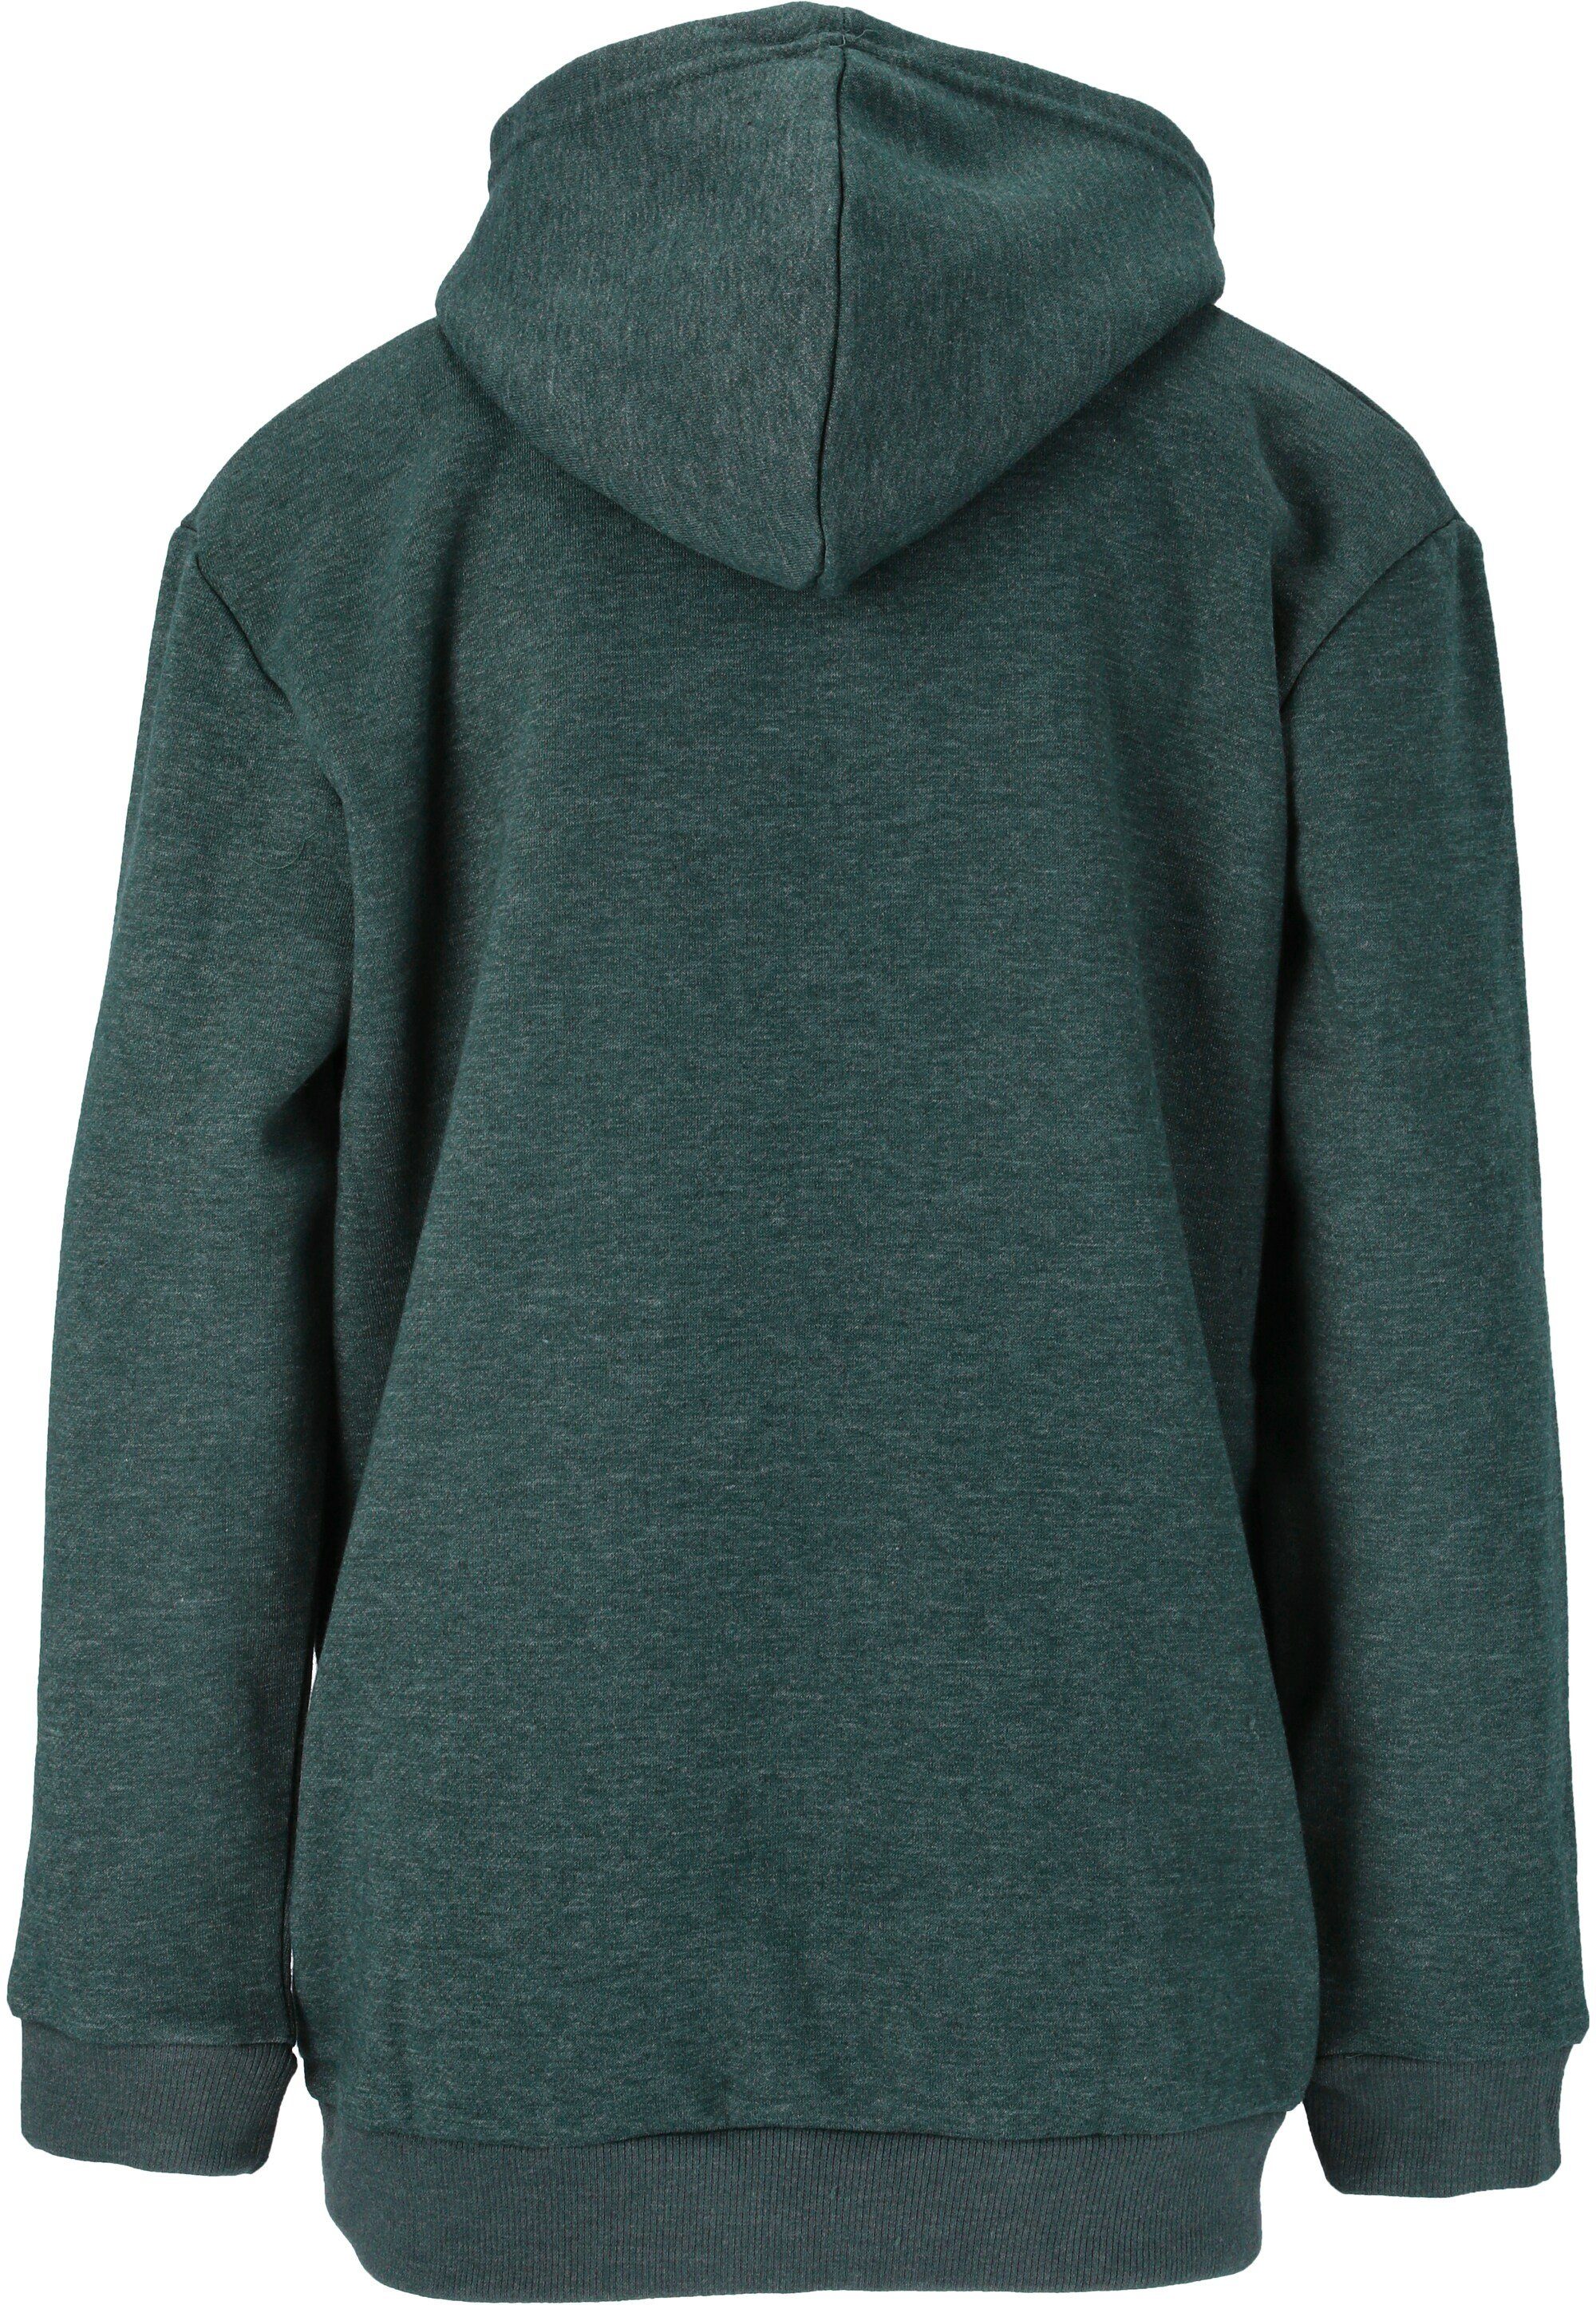 CRUZ Sweatshirt trendigem dunkelgrün mit Frontprint Sweeny